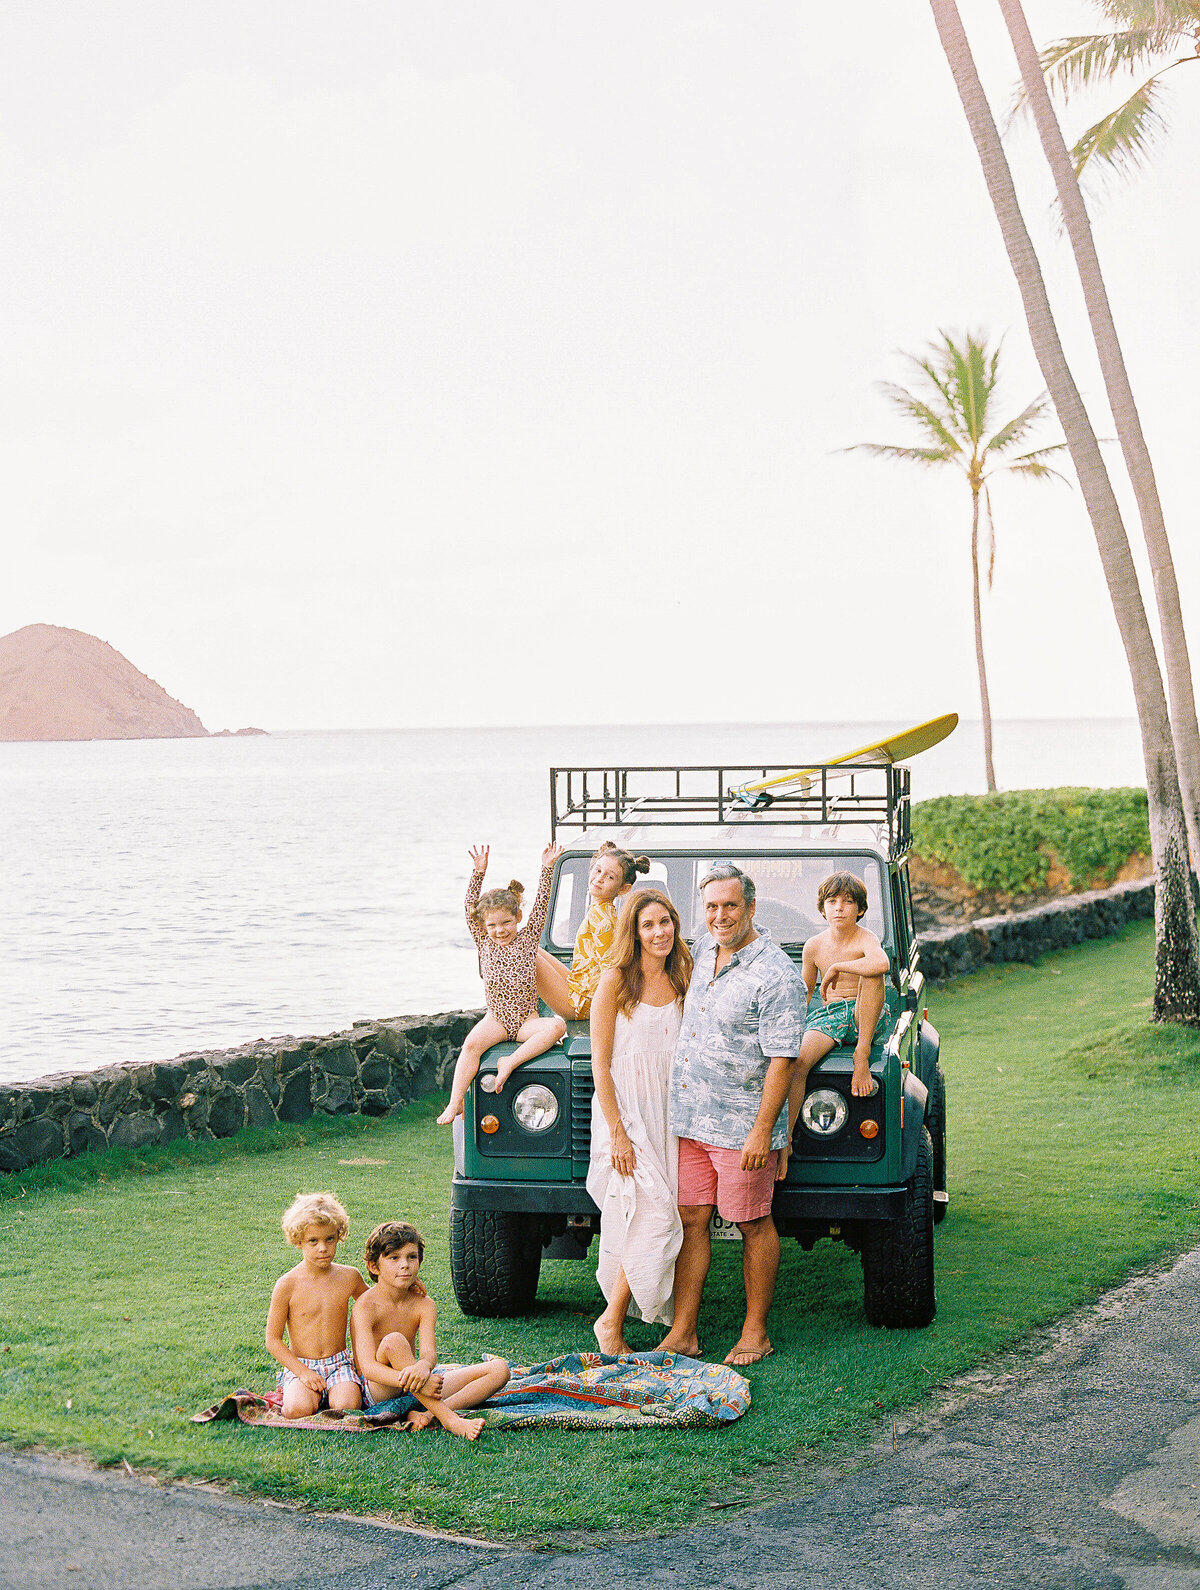 MartinFamily | Hawaii Wedding & Lifestyle Photography | Ashley Goodwin Photography